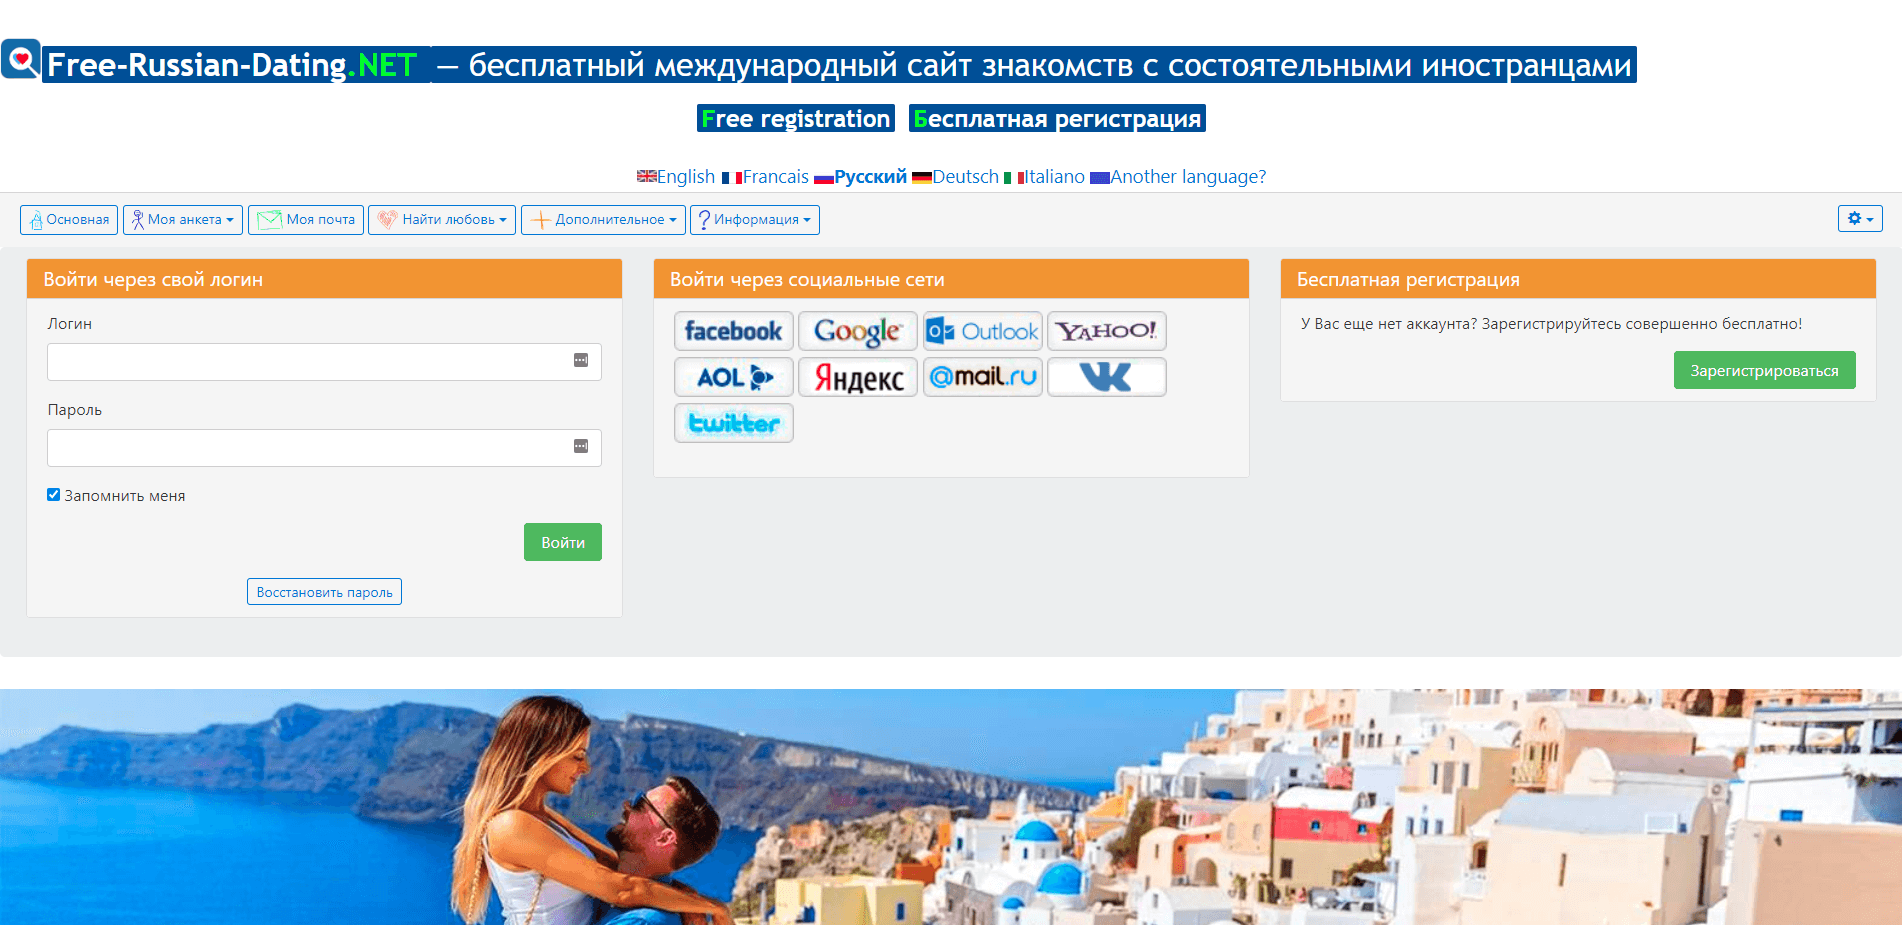 free russian dating.net